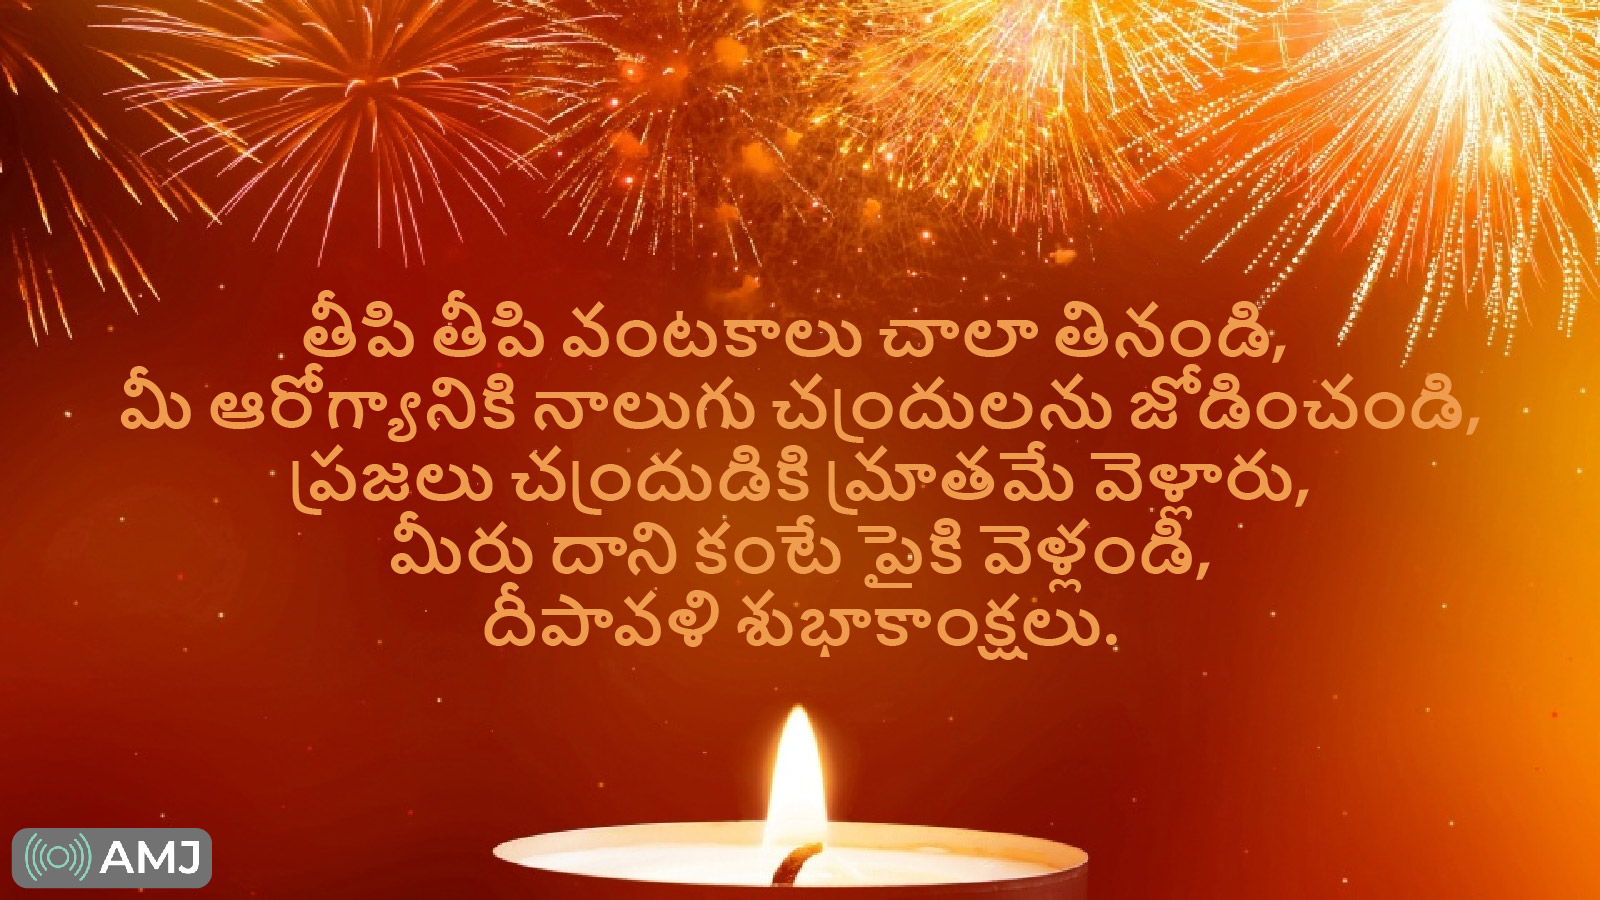 Diwali Pics in Telugu